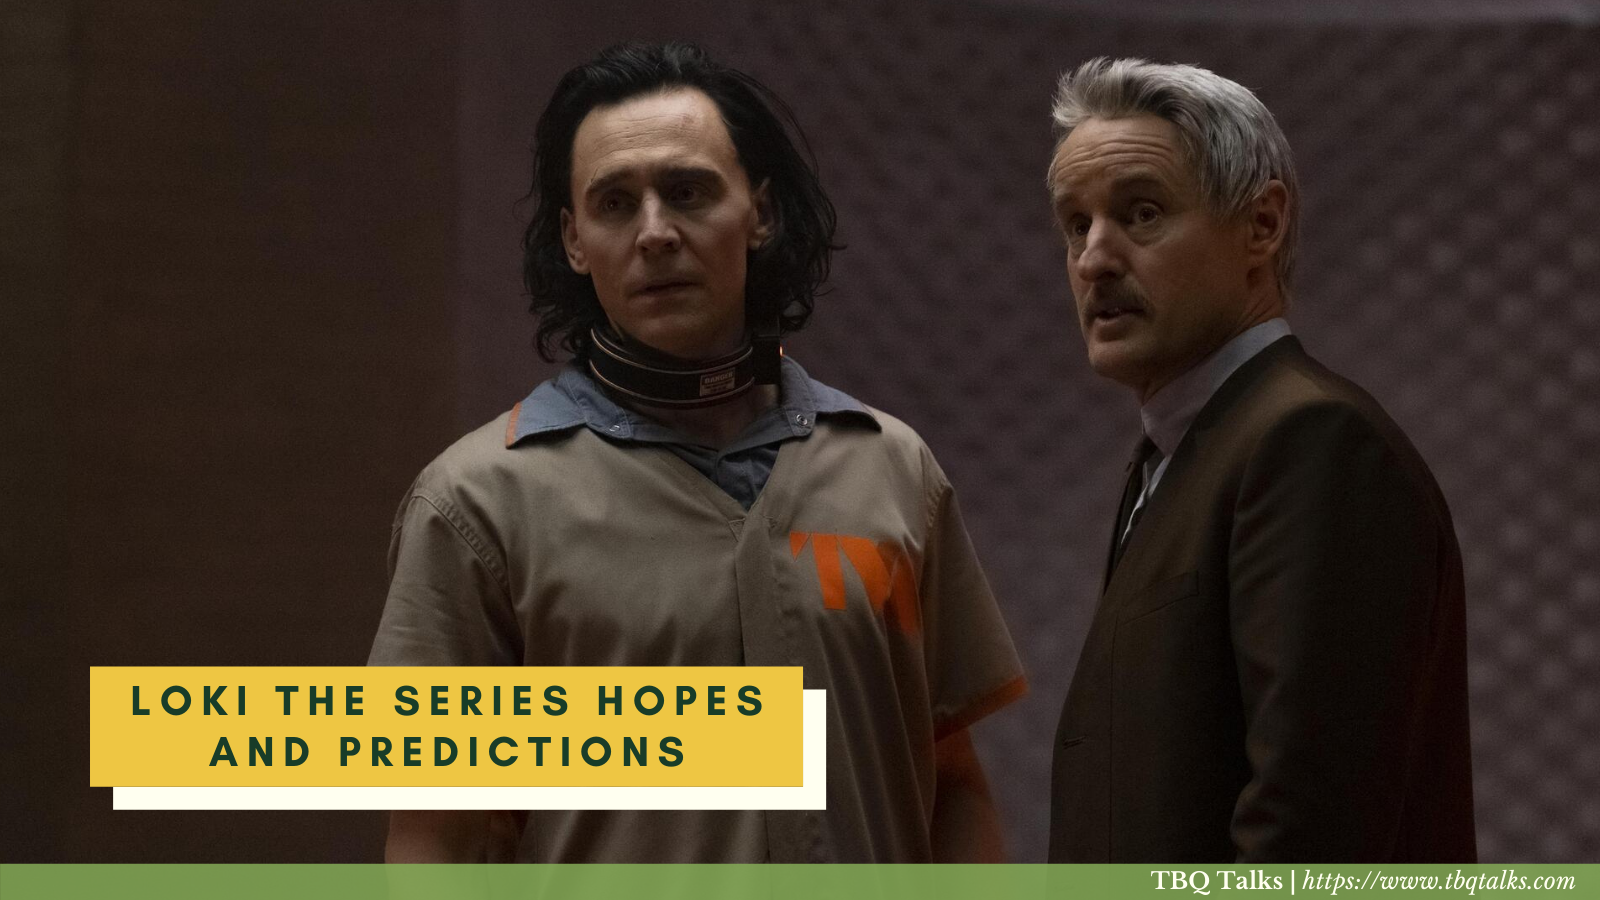 Loki the Series Hopes and Predictions